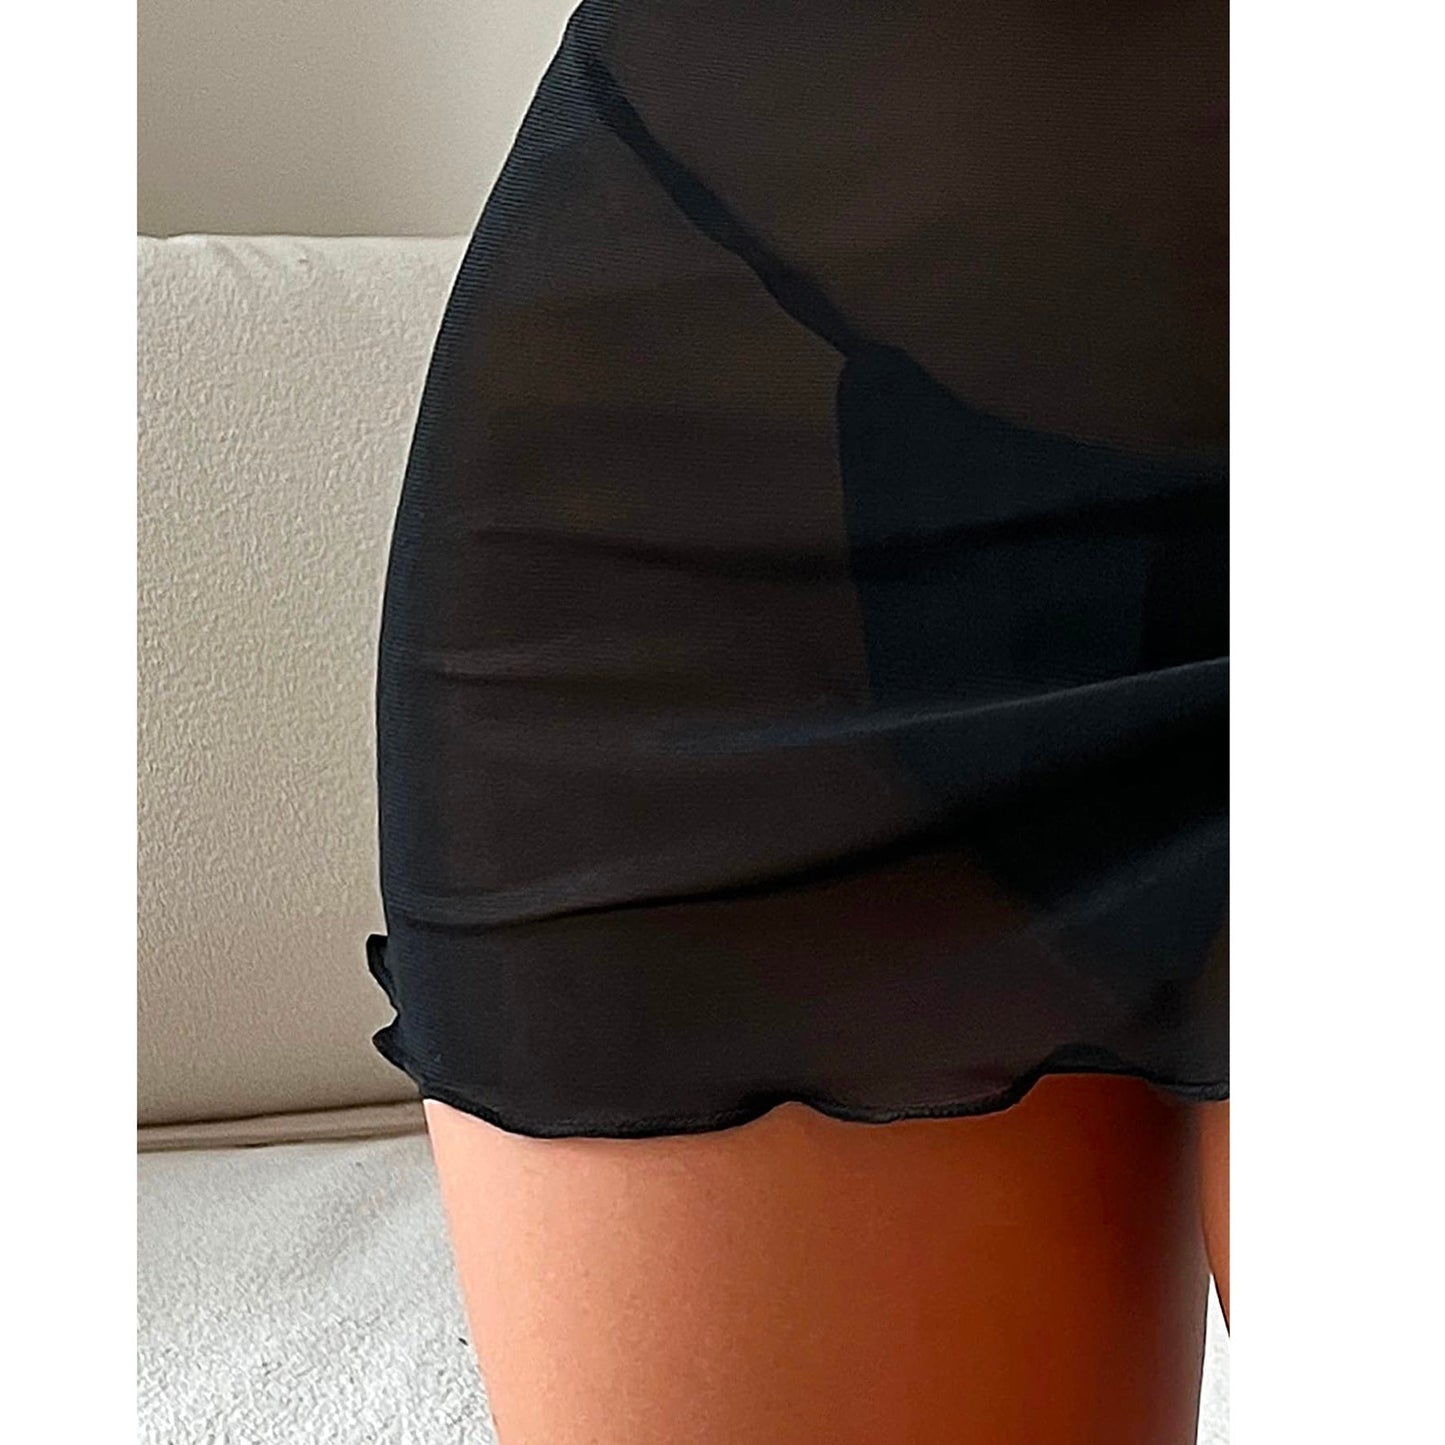 Women Ruffle Trim Sheer Beach Skirt Cover Up Skirt Beach Wrap Bikini Shiny Cover Ups For Swimwear Mesh Drawstring Cover Up Skirt